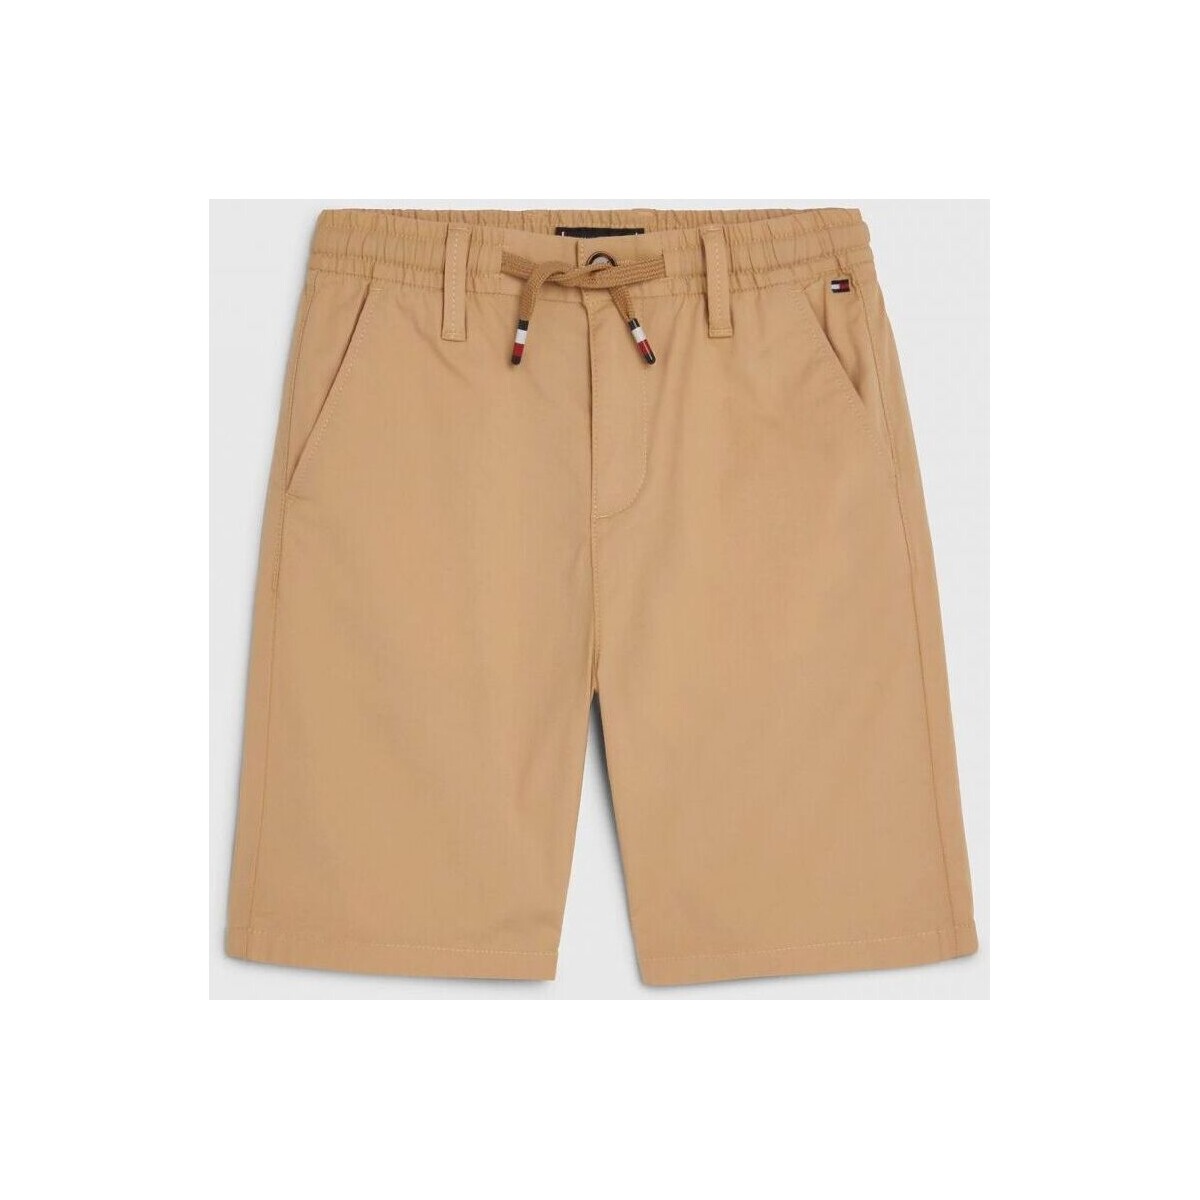 Vêtements Garçon Shorts / Bermudas Tommy Hilfiger KB0KB08124-A44 TRENCH Beige